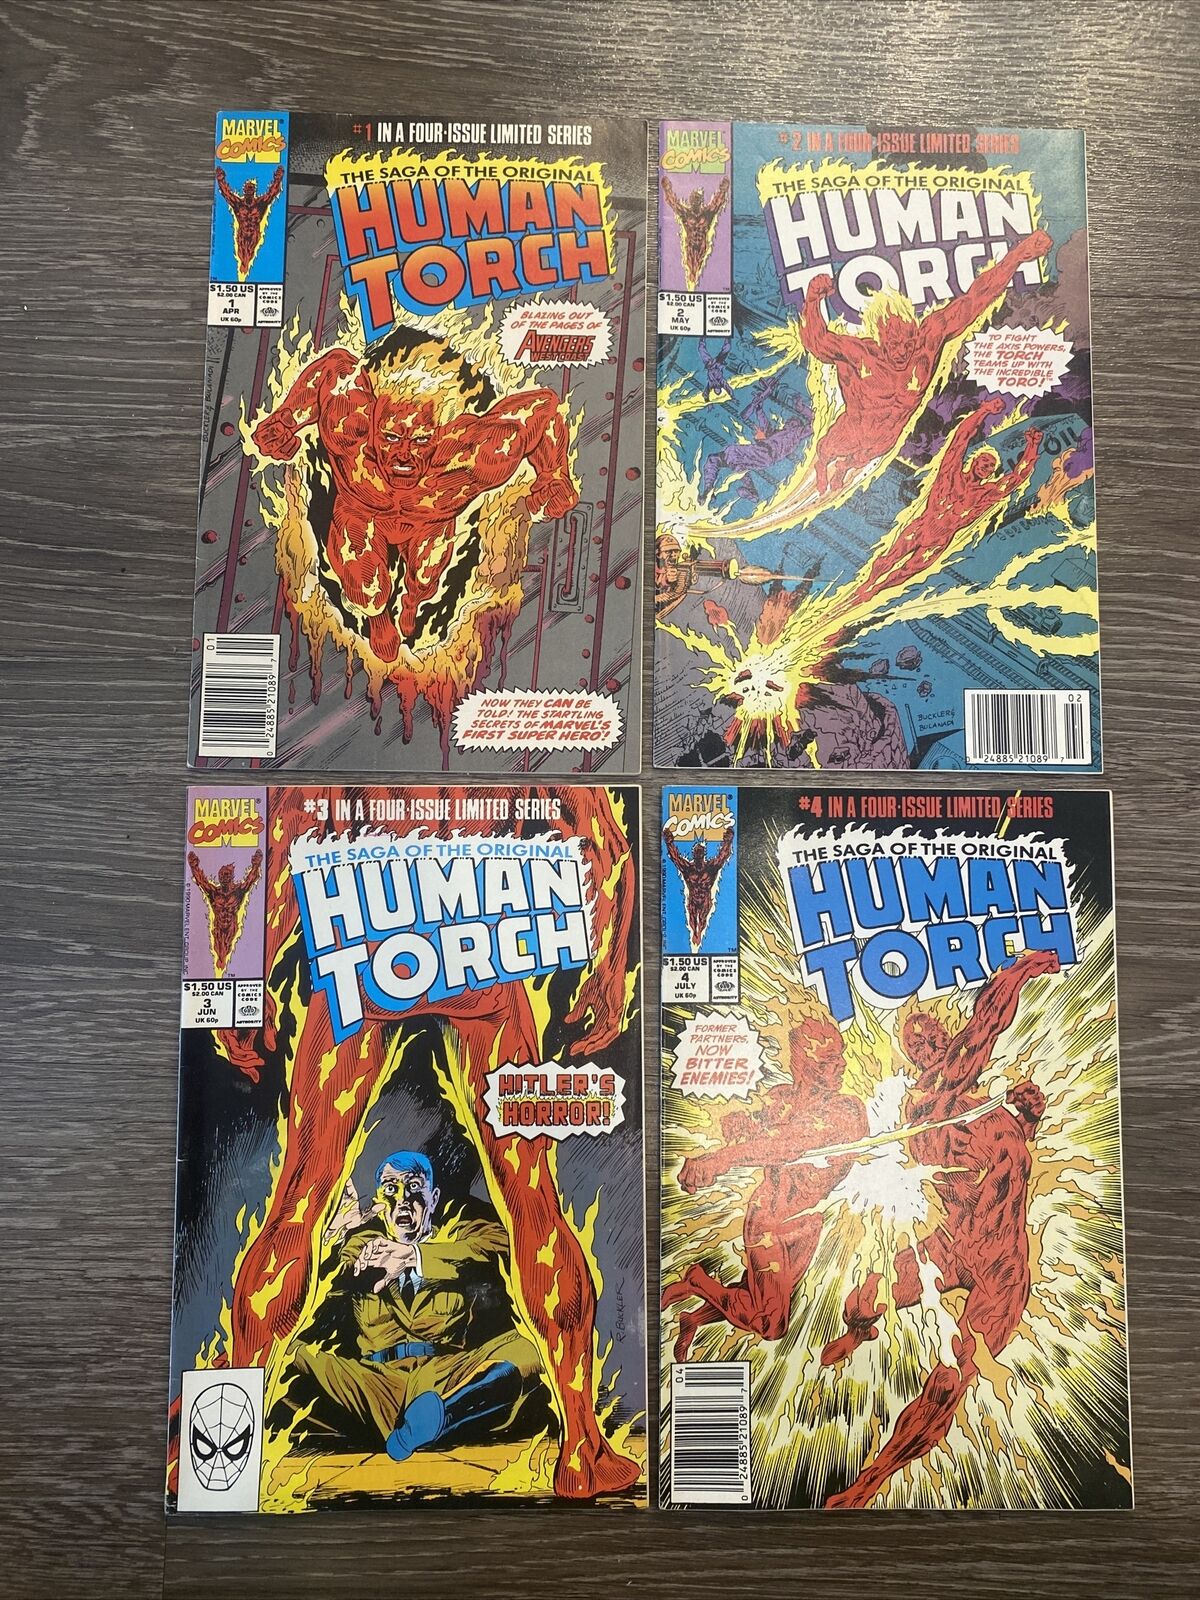 The Saga of the Original Human Torch #1-4 Complete Set (Marvel Comics 1990) VF